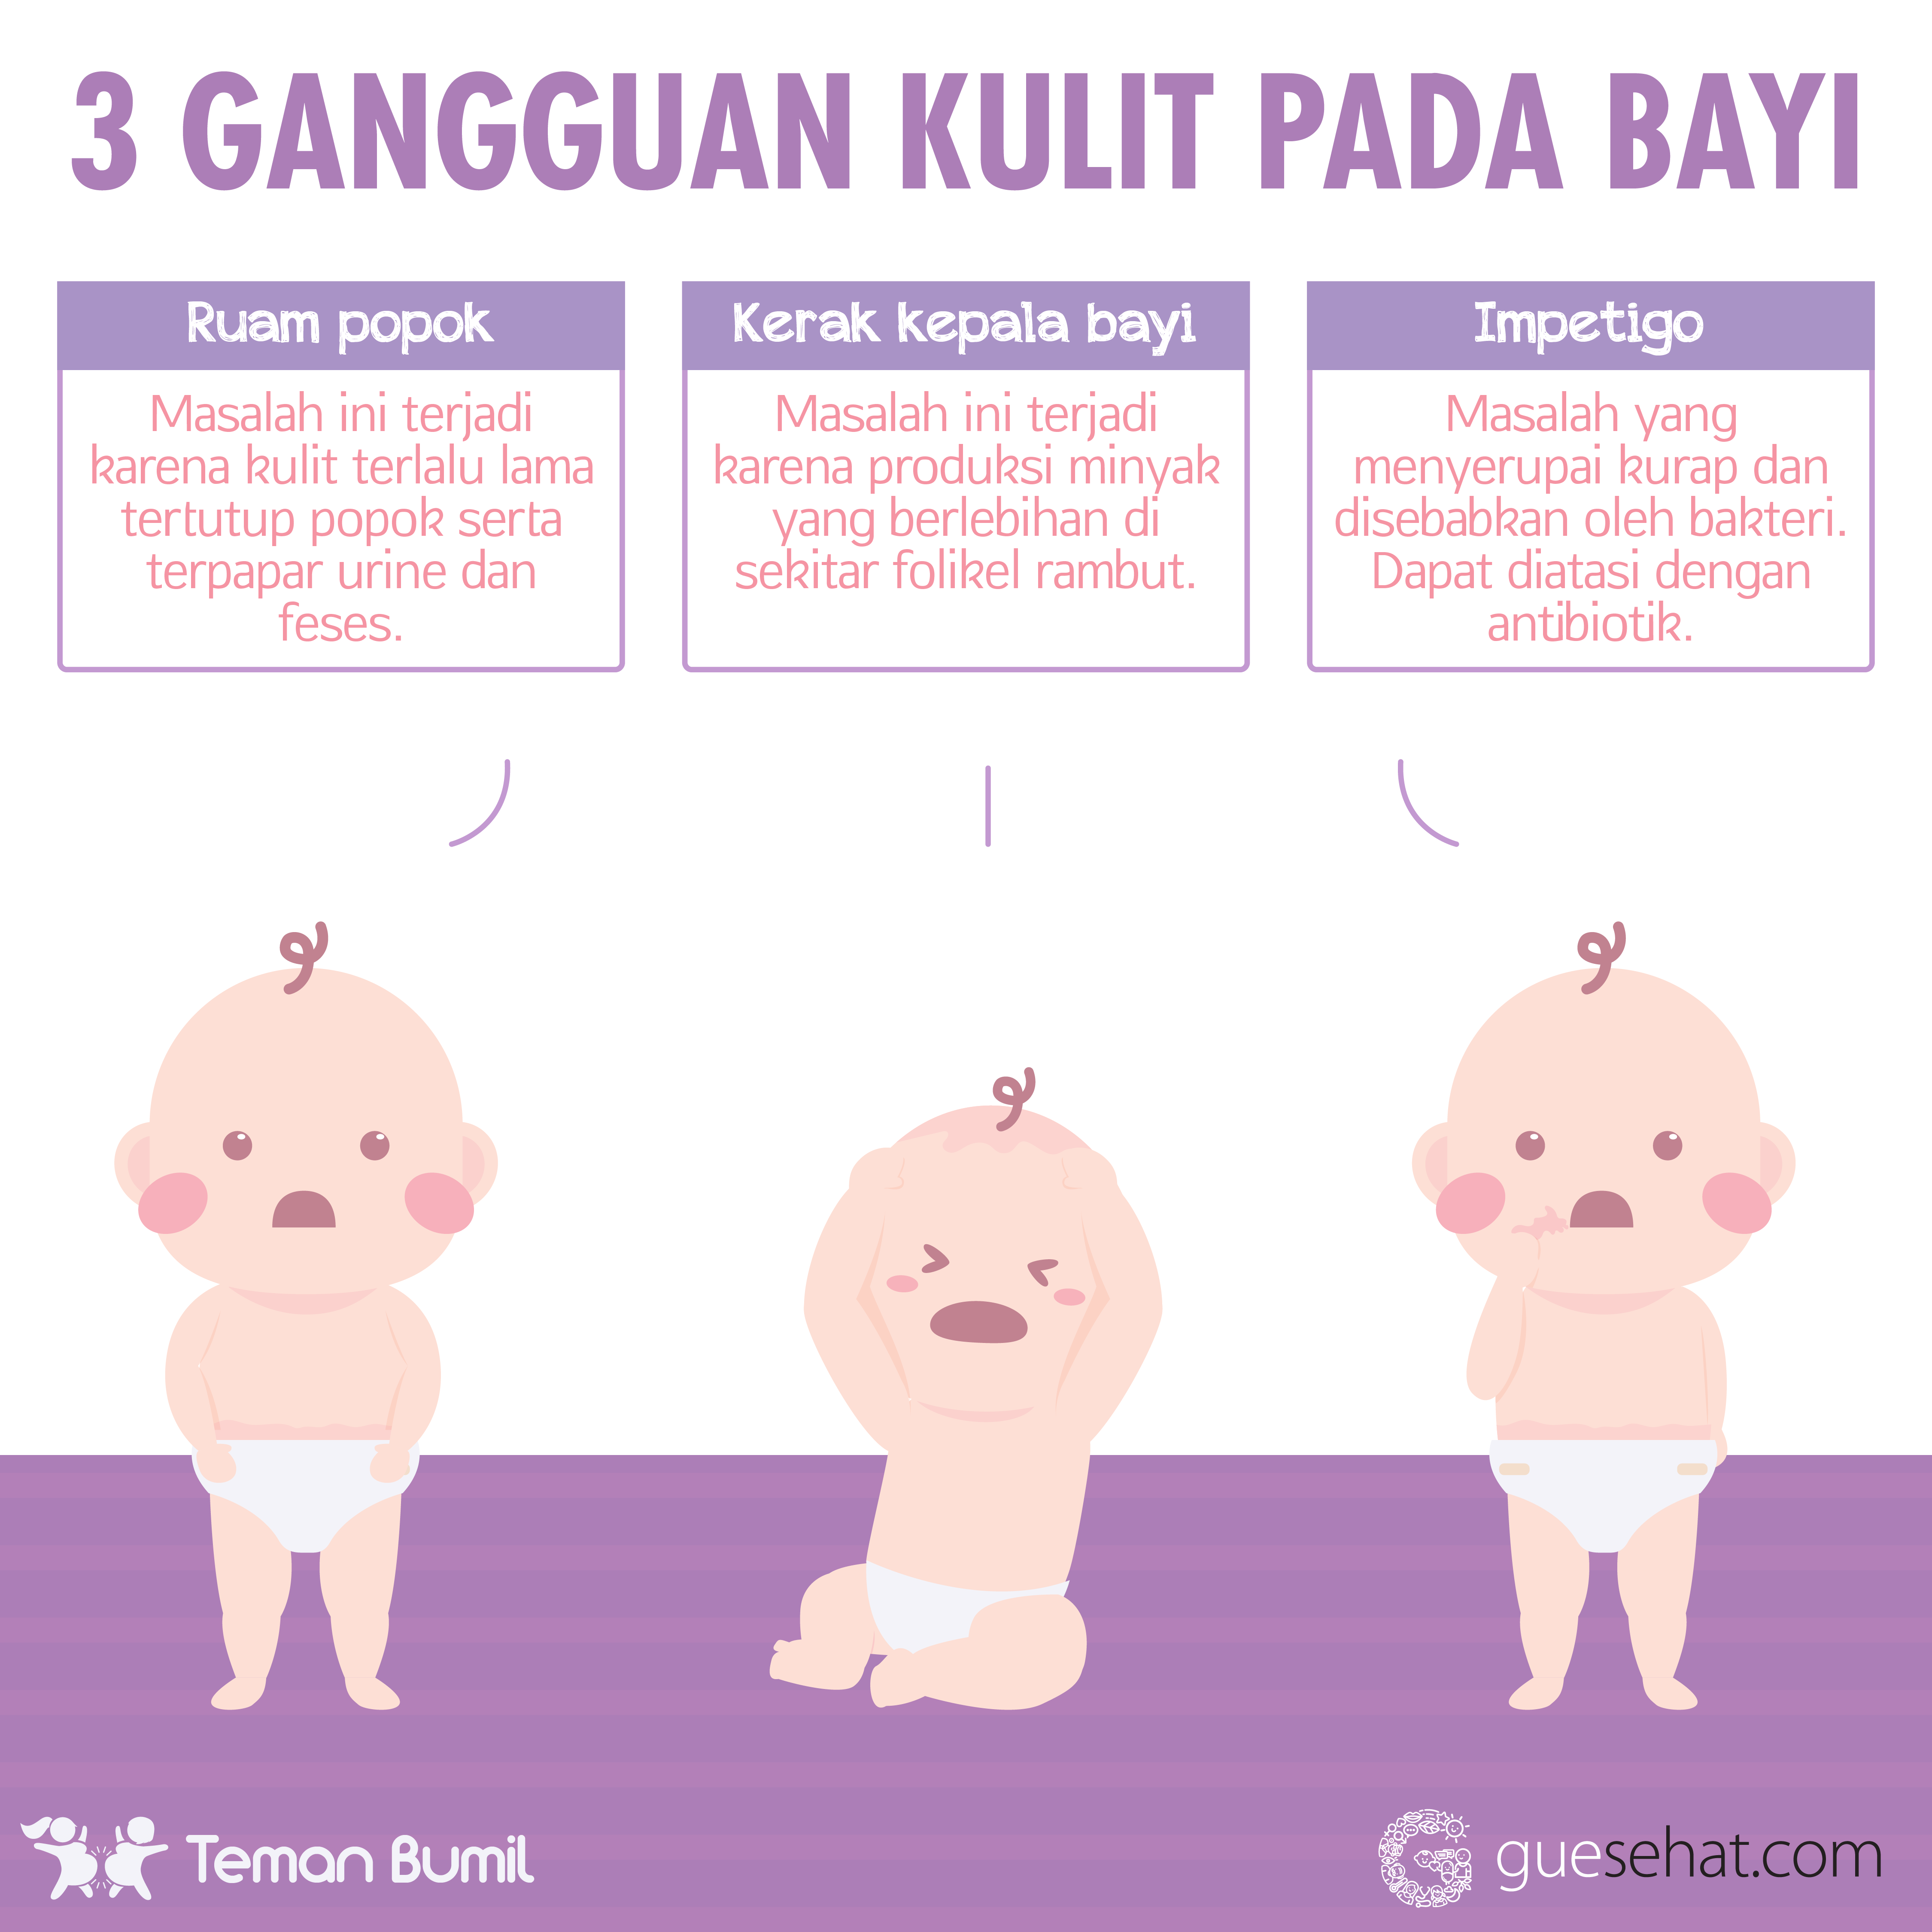 Gangguan Kulit pada Bayi - GueSehat.com